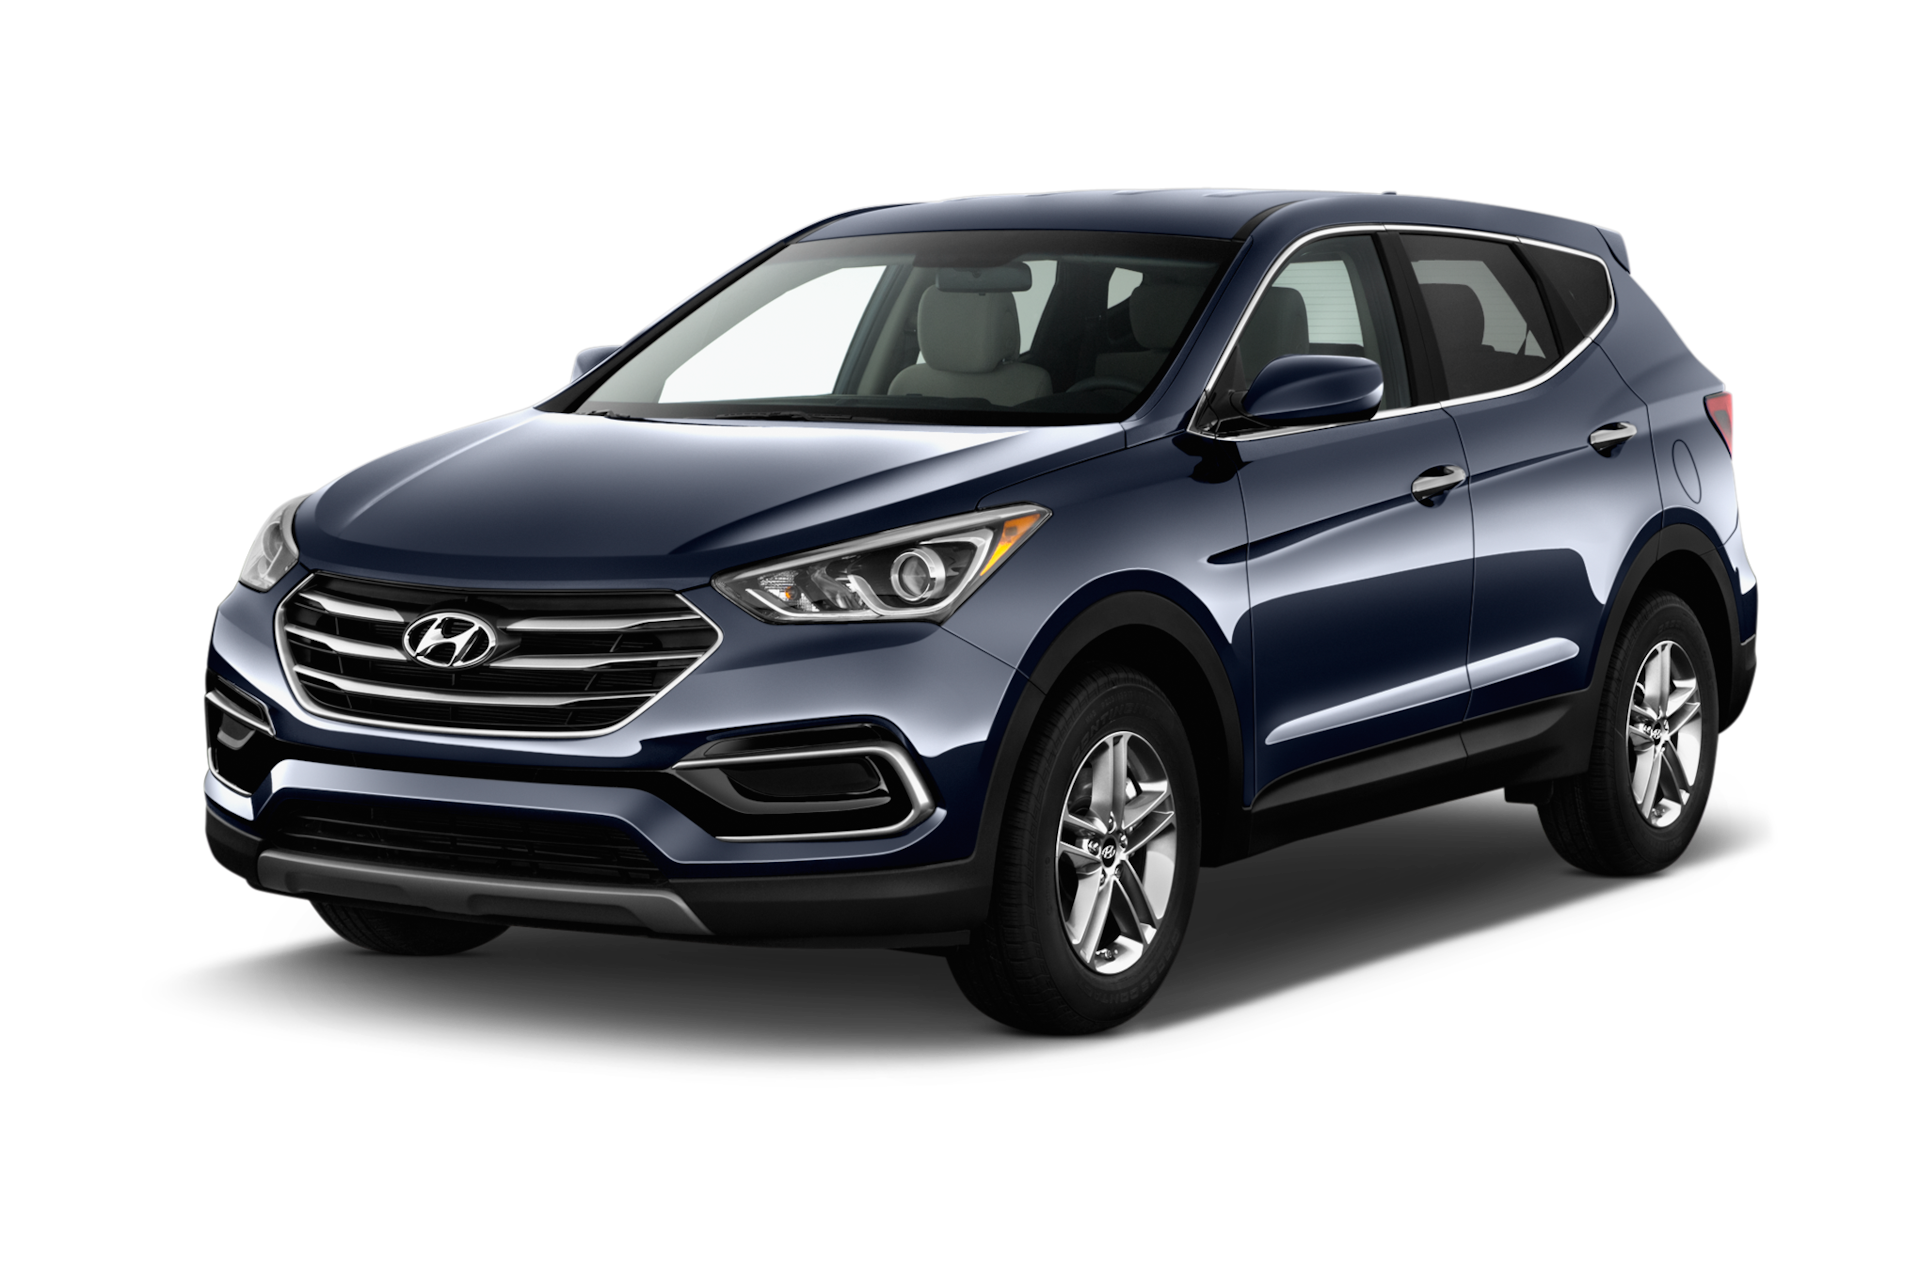 2018 Hyundai Santa Fe Sport Prices, Reviews, and Photos - MotorTrend